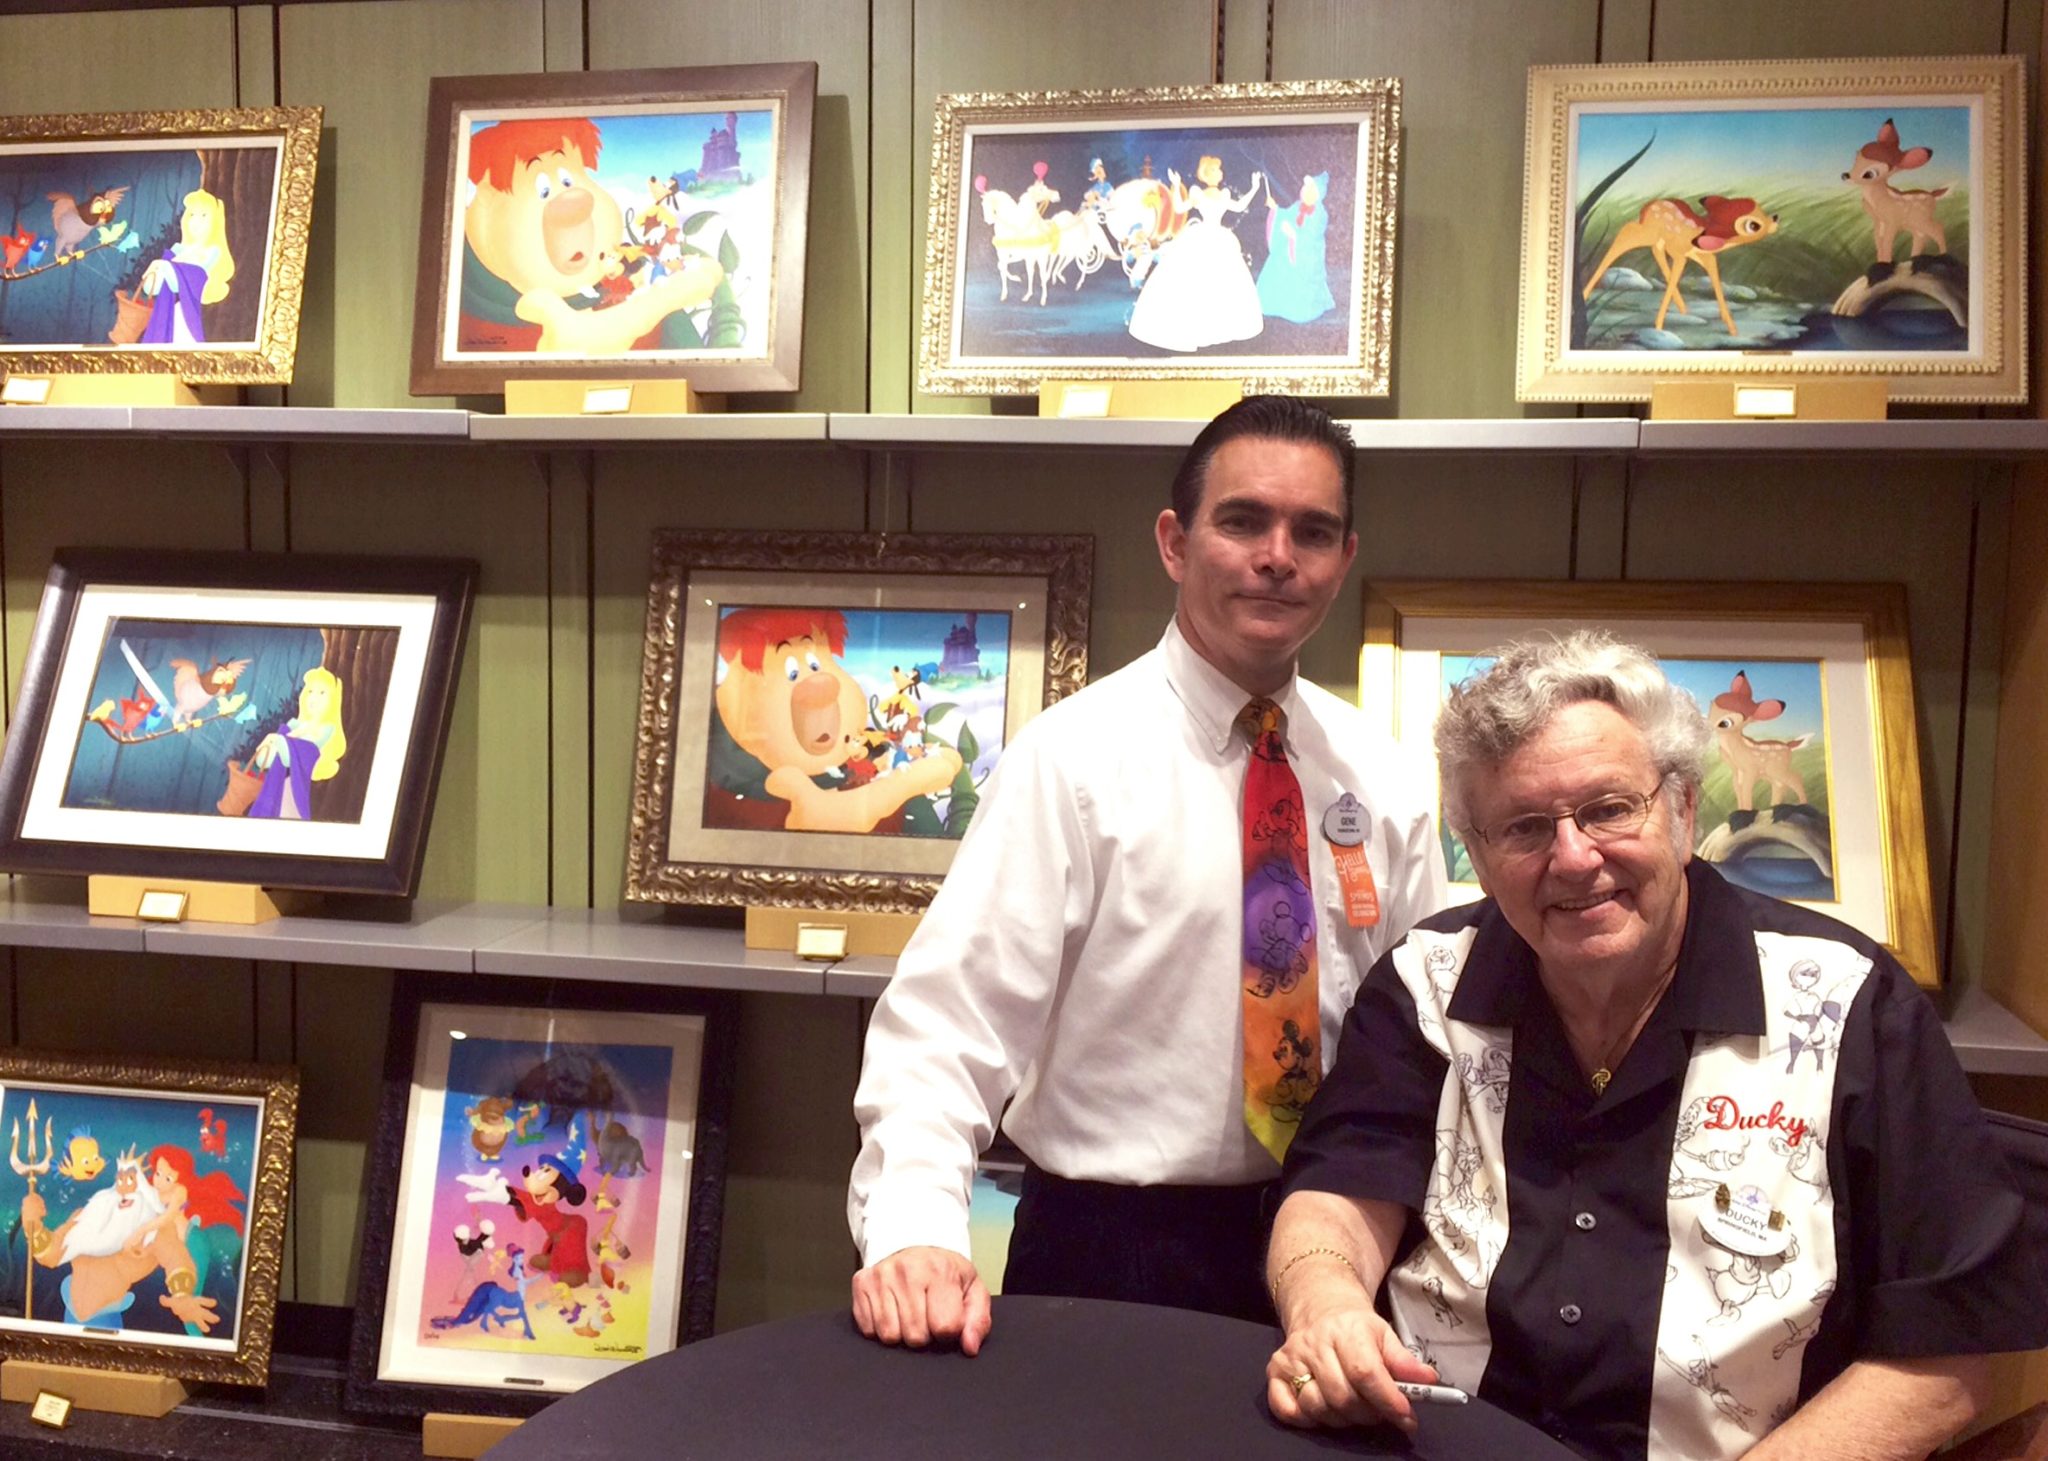 Meet Disney Artists Don “Ducky” Williams & Gene Gonda at The Art of Disney